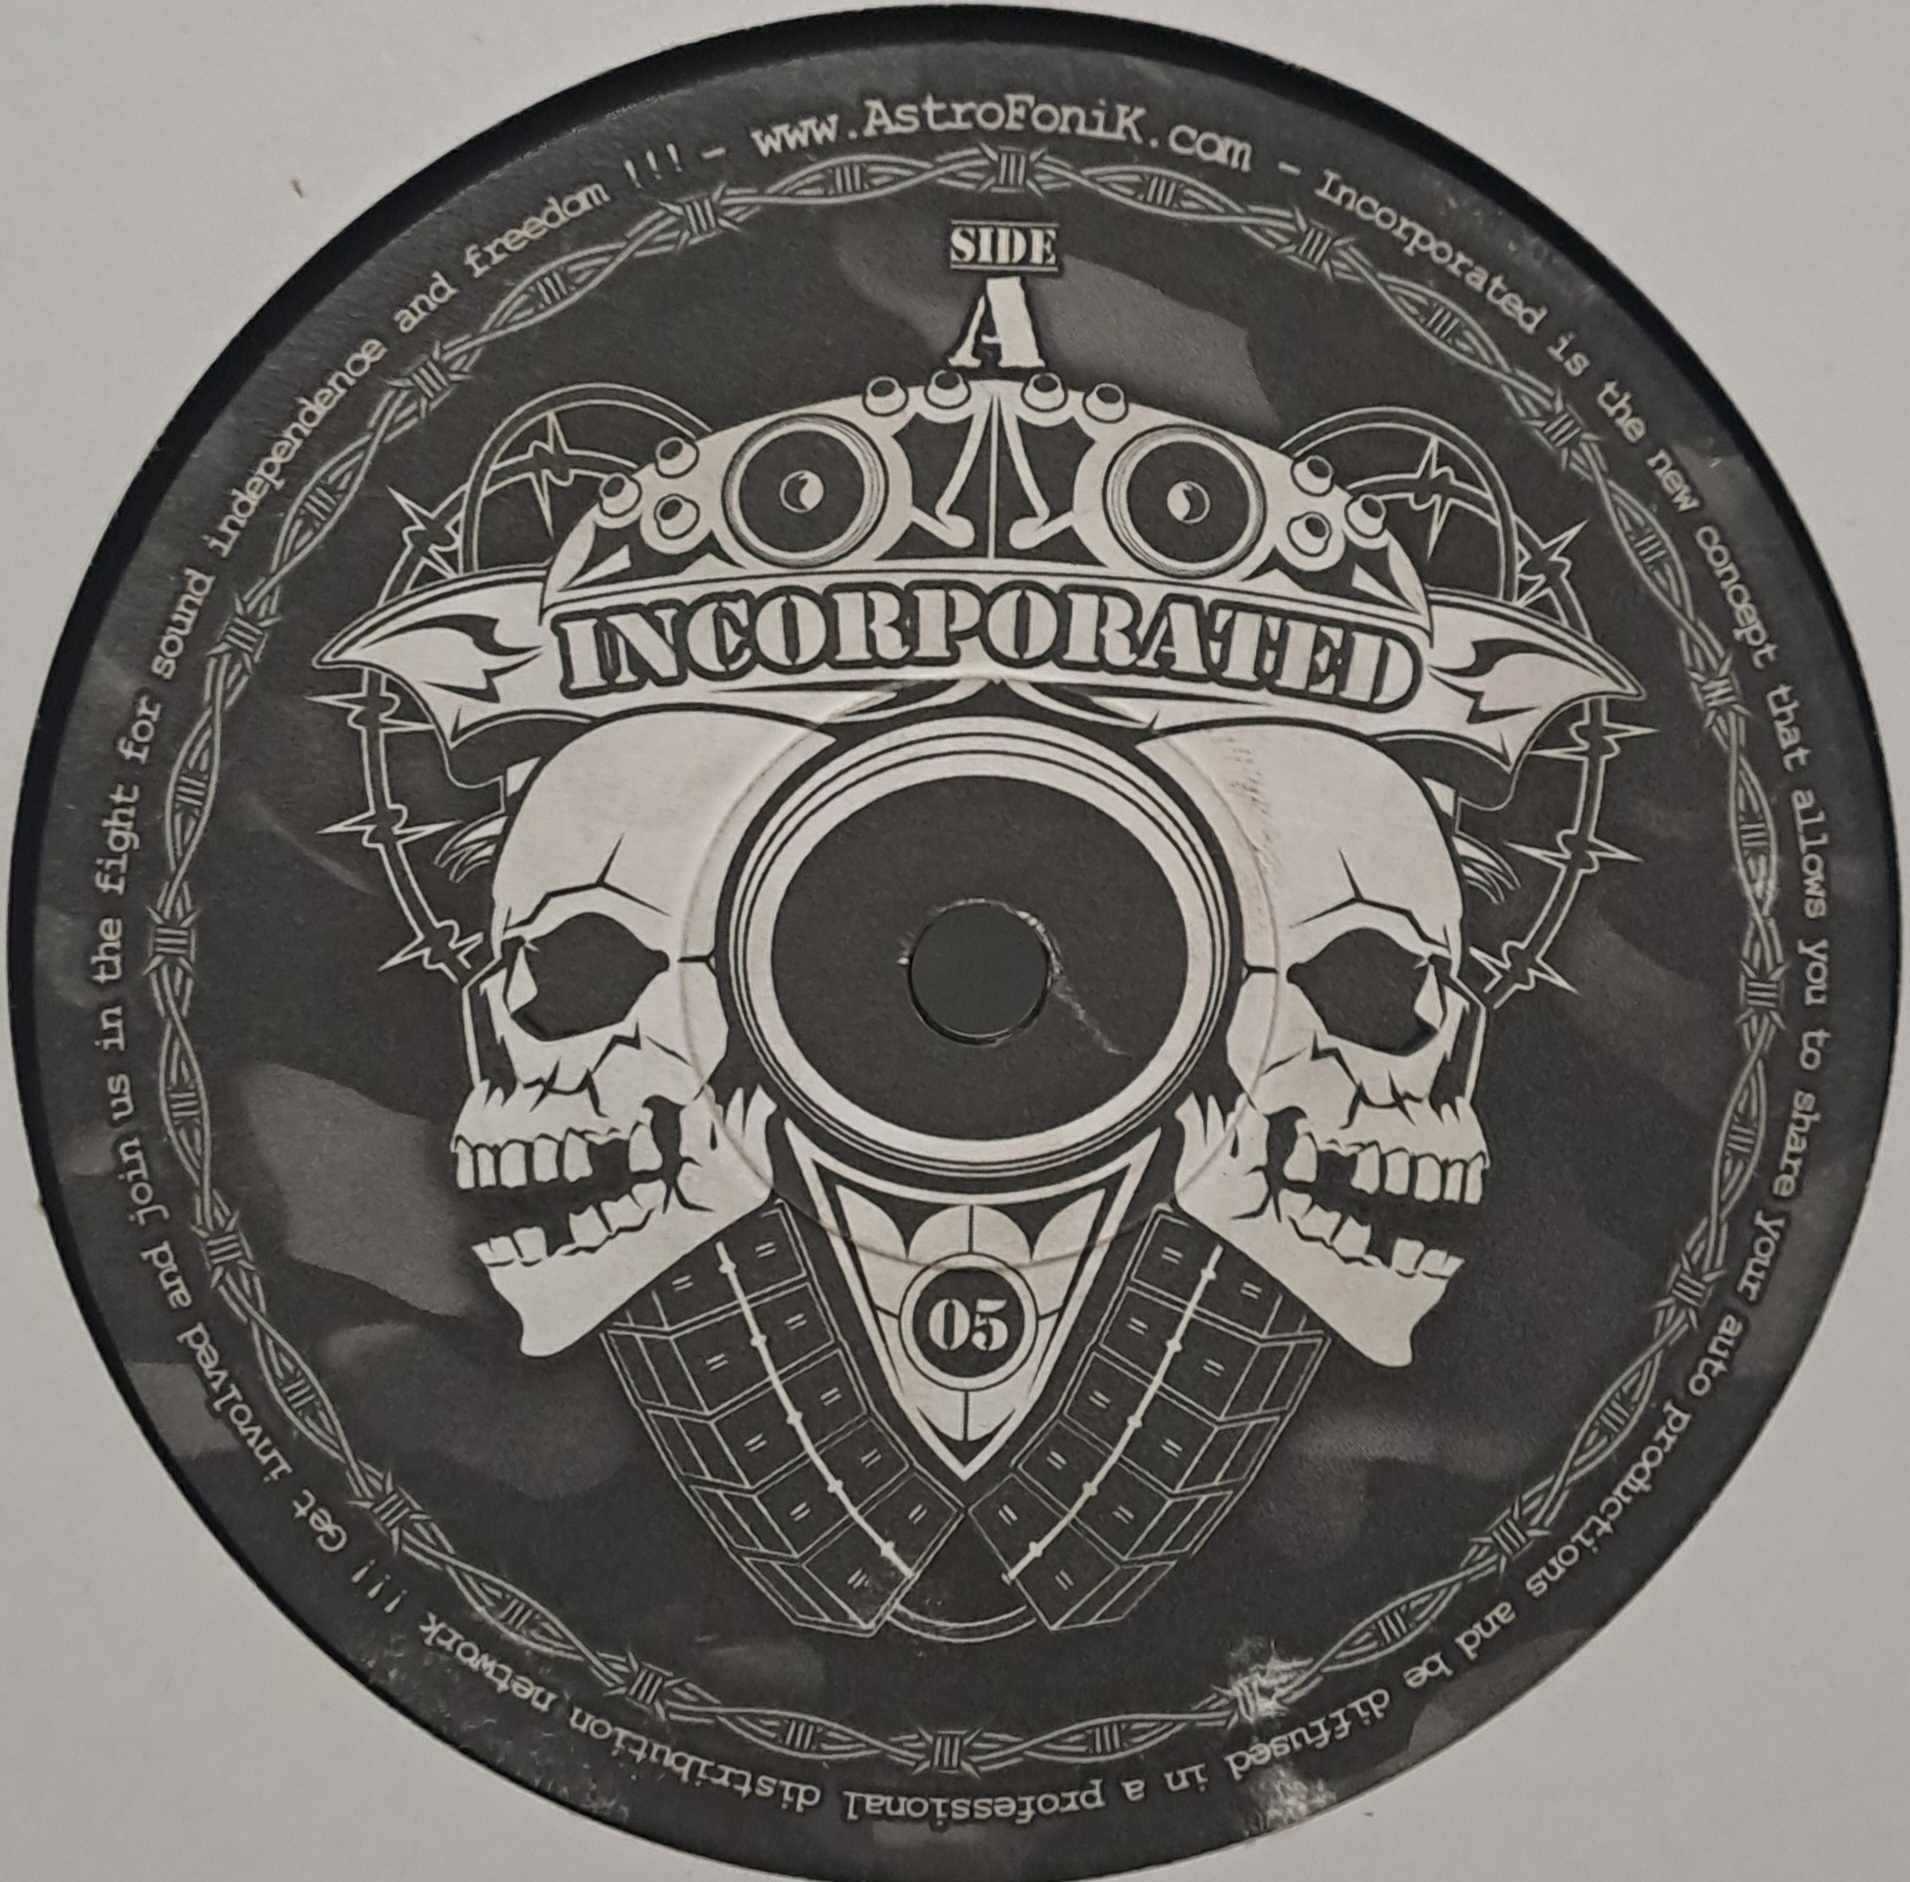 Incorporated 05 - vinyle tribecore